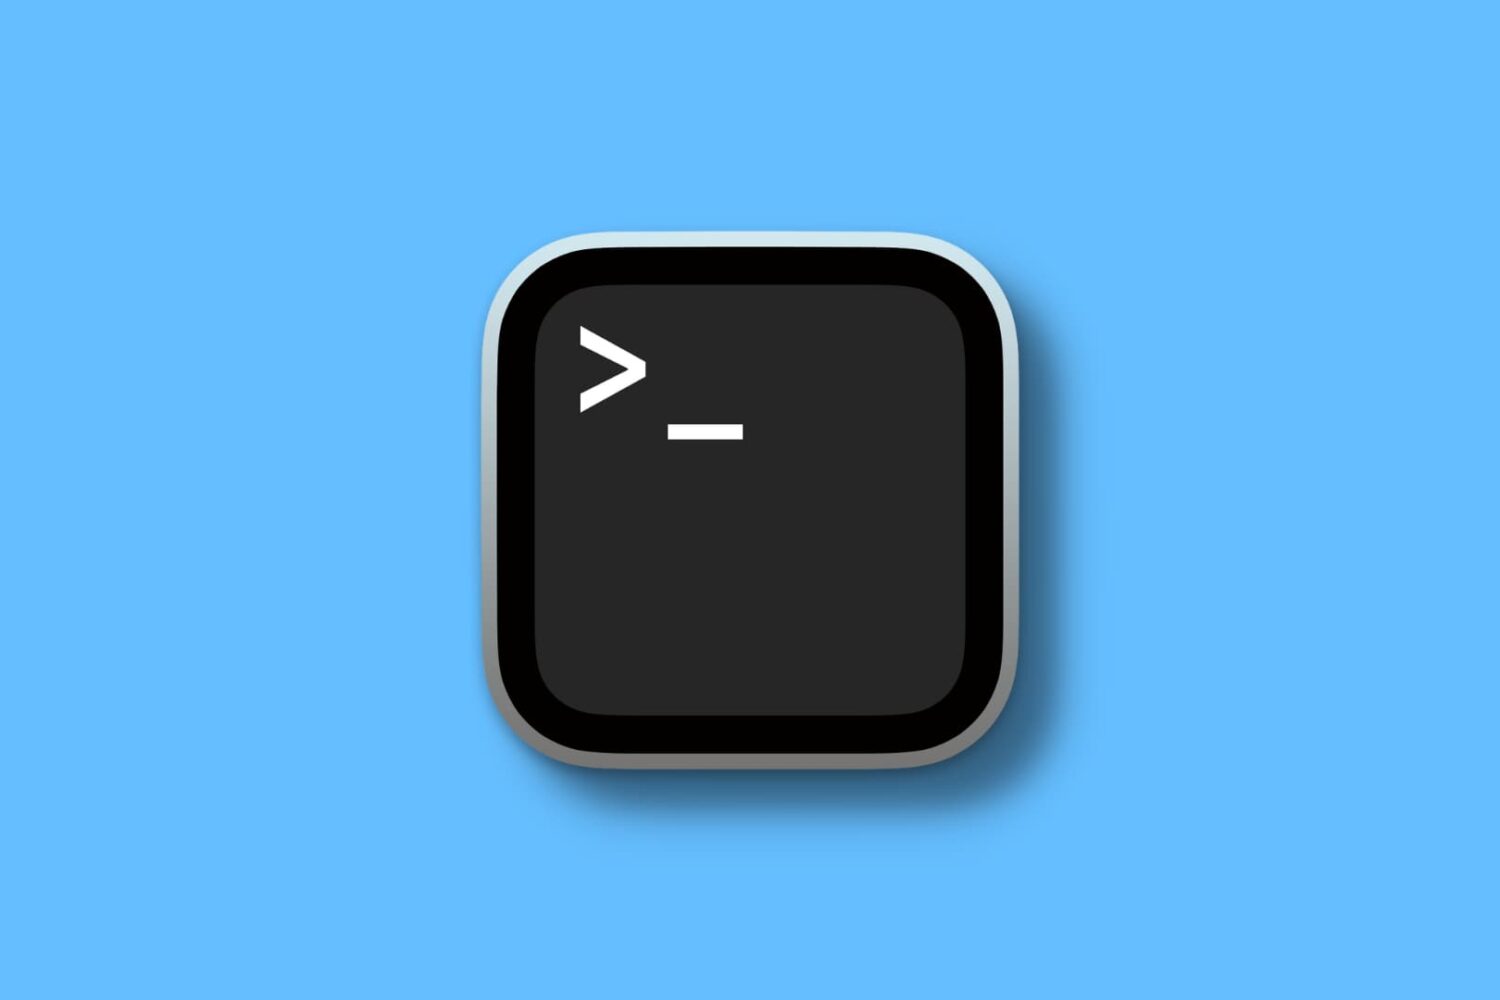 Mac's Terminal app icon